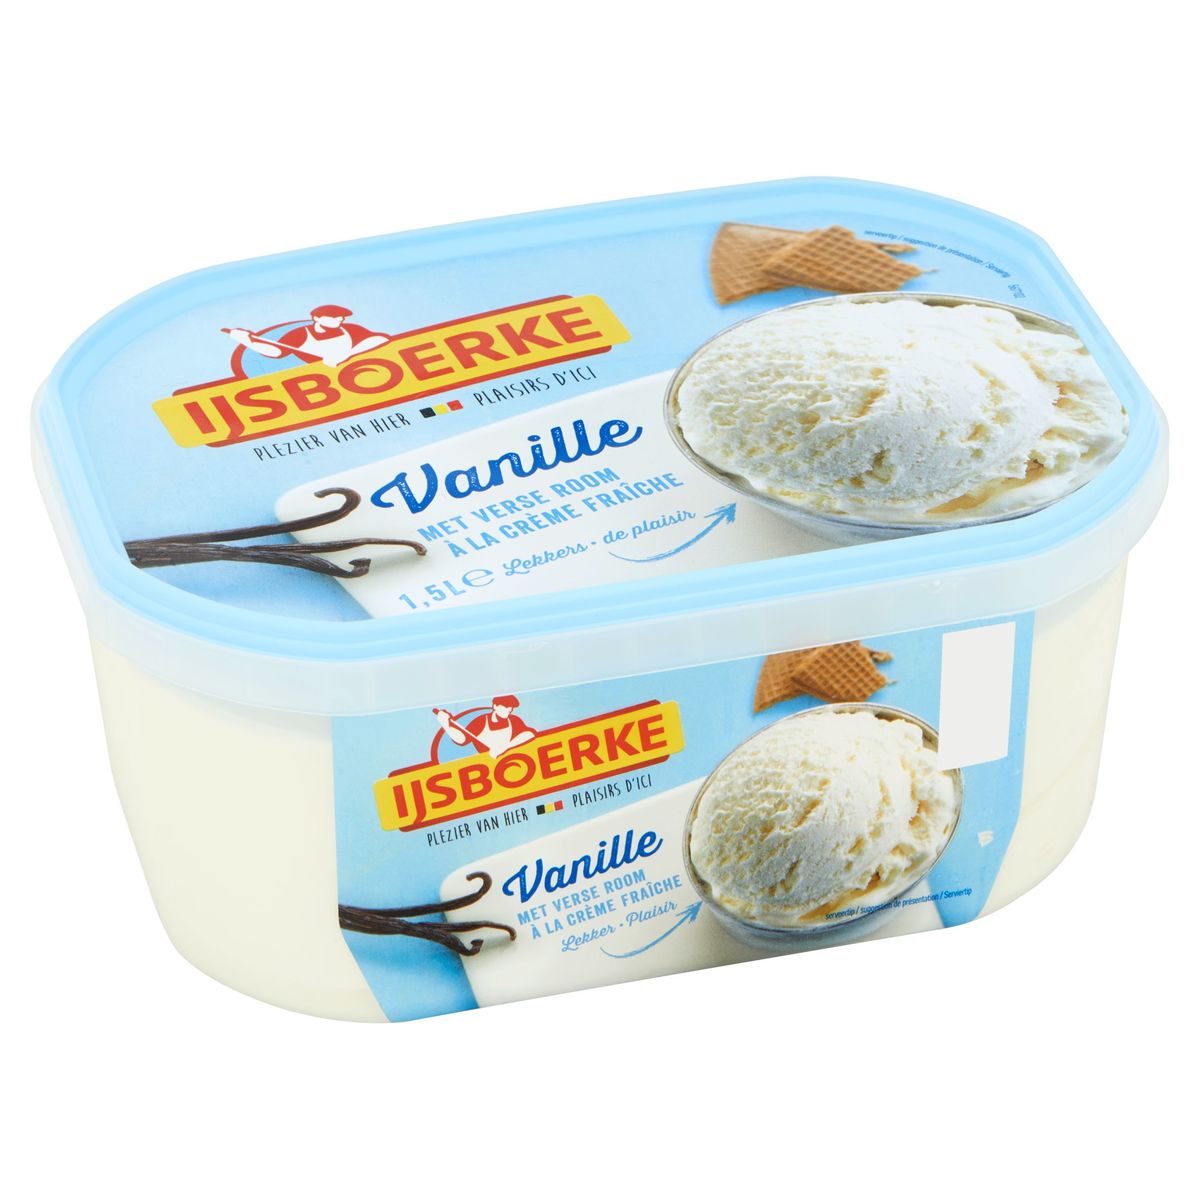 IJsboerke Vanille Crème Glacée 1.5 L